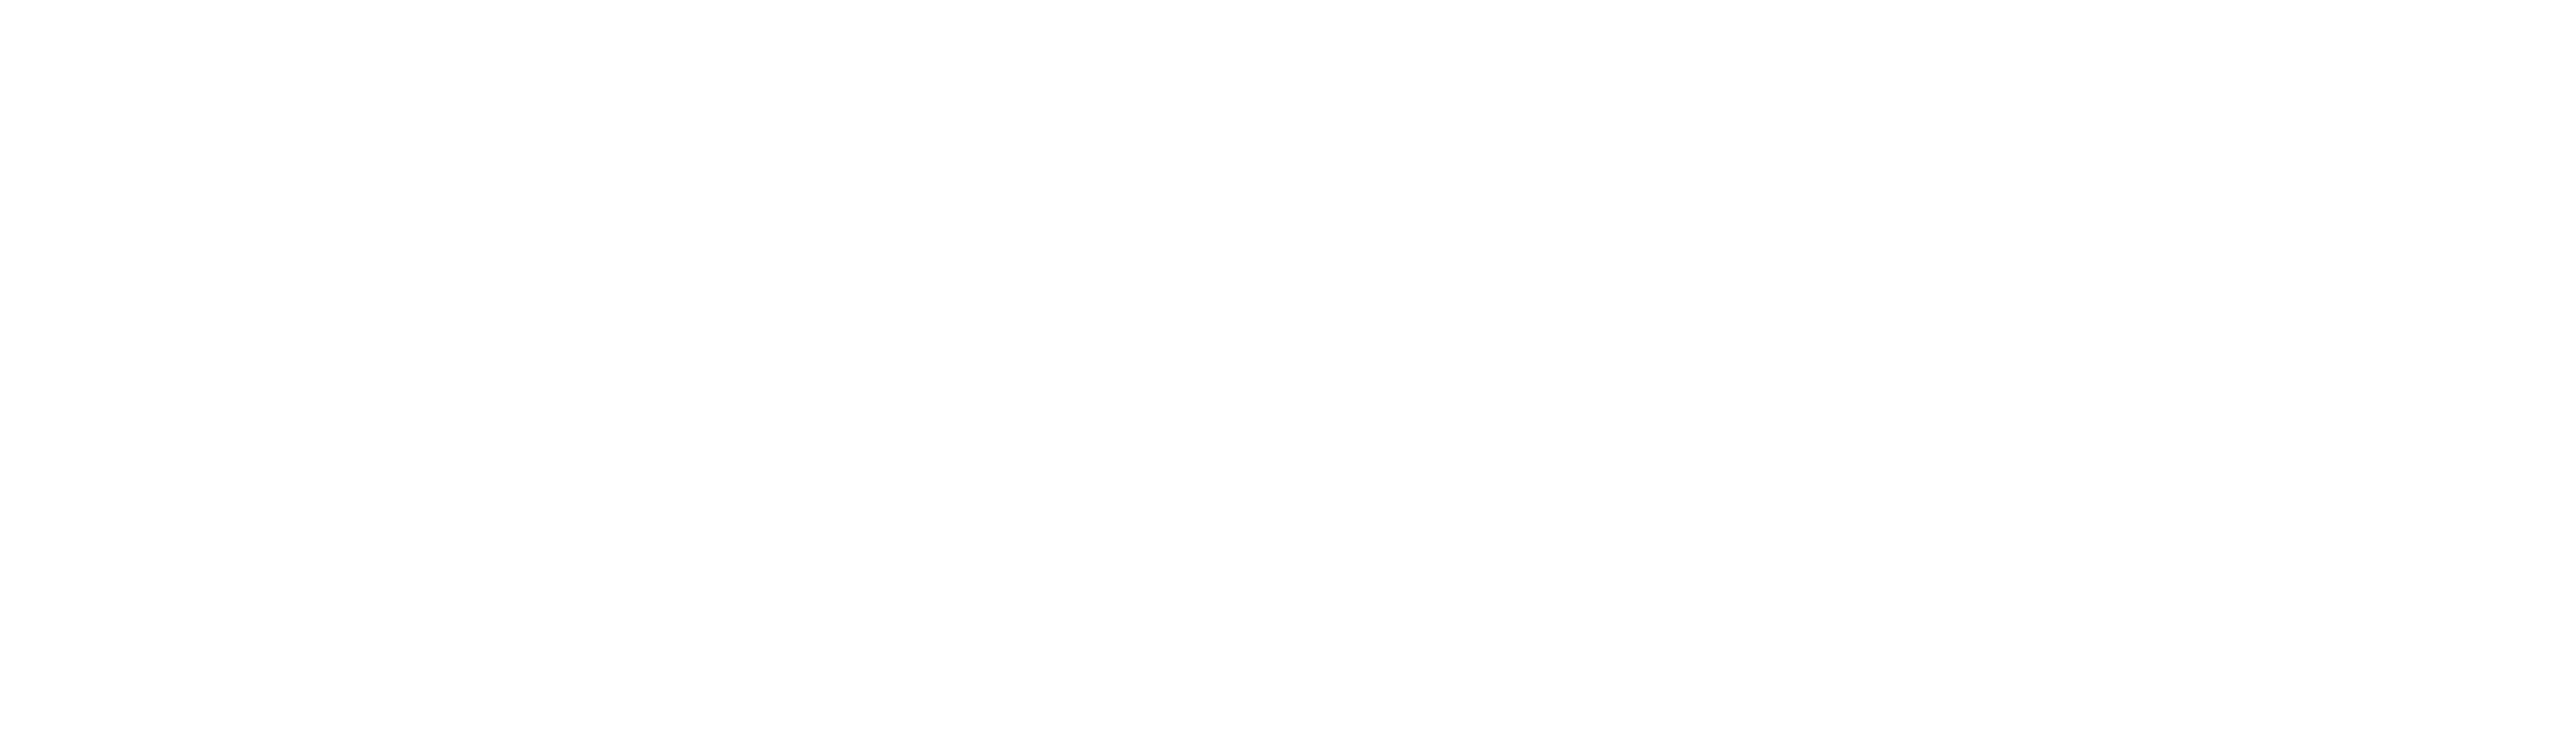 wedding awards